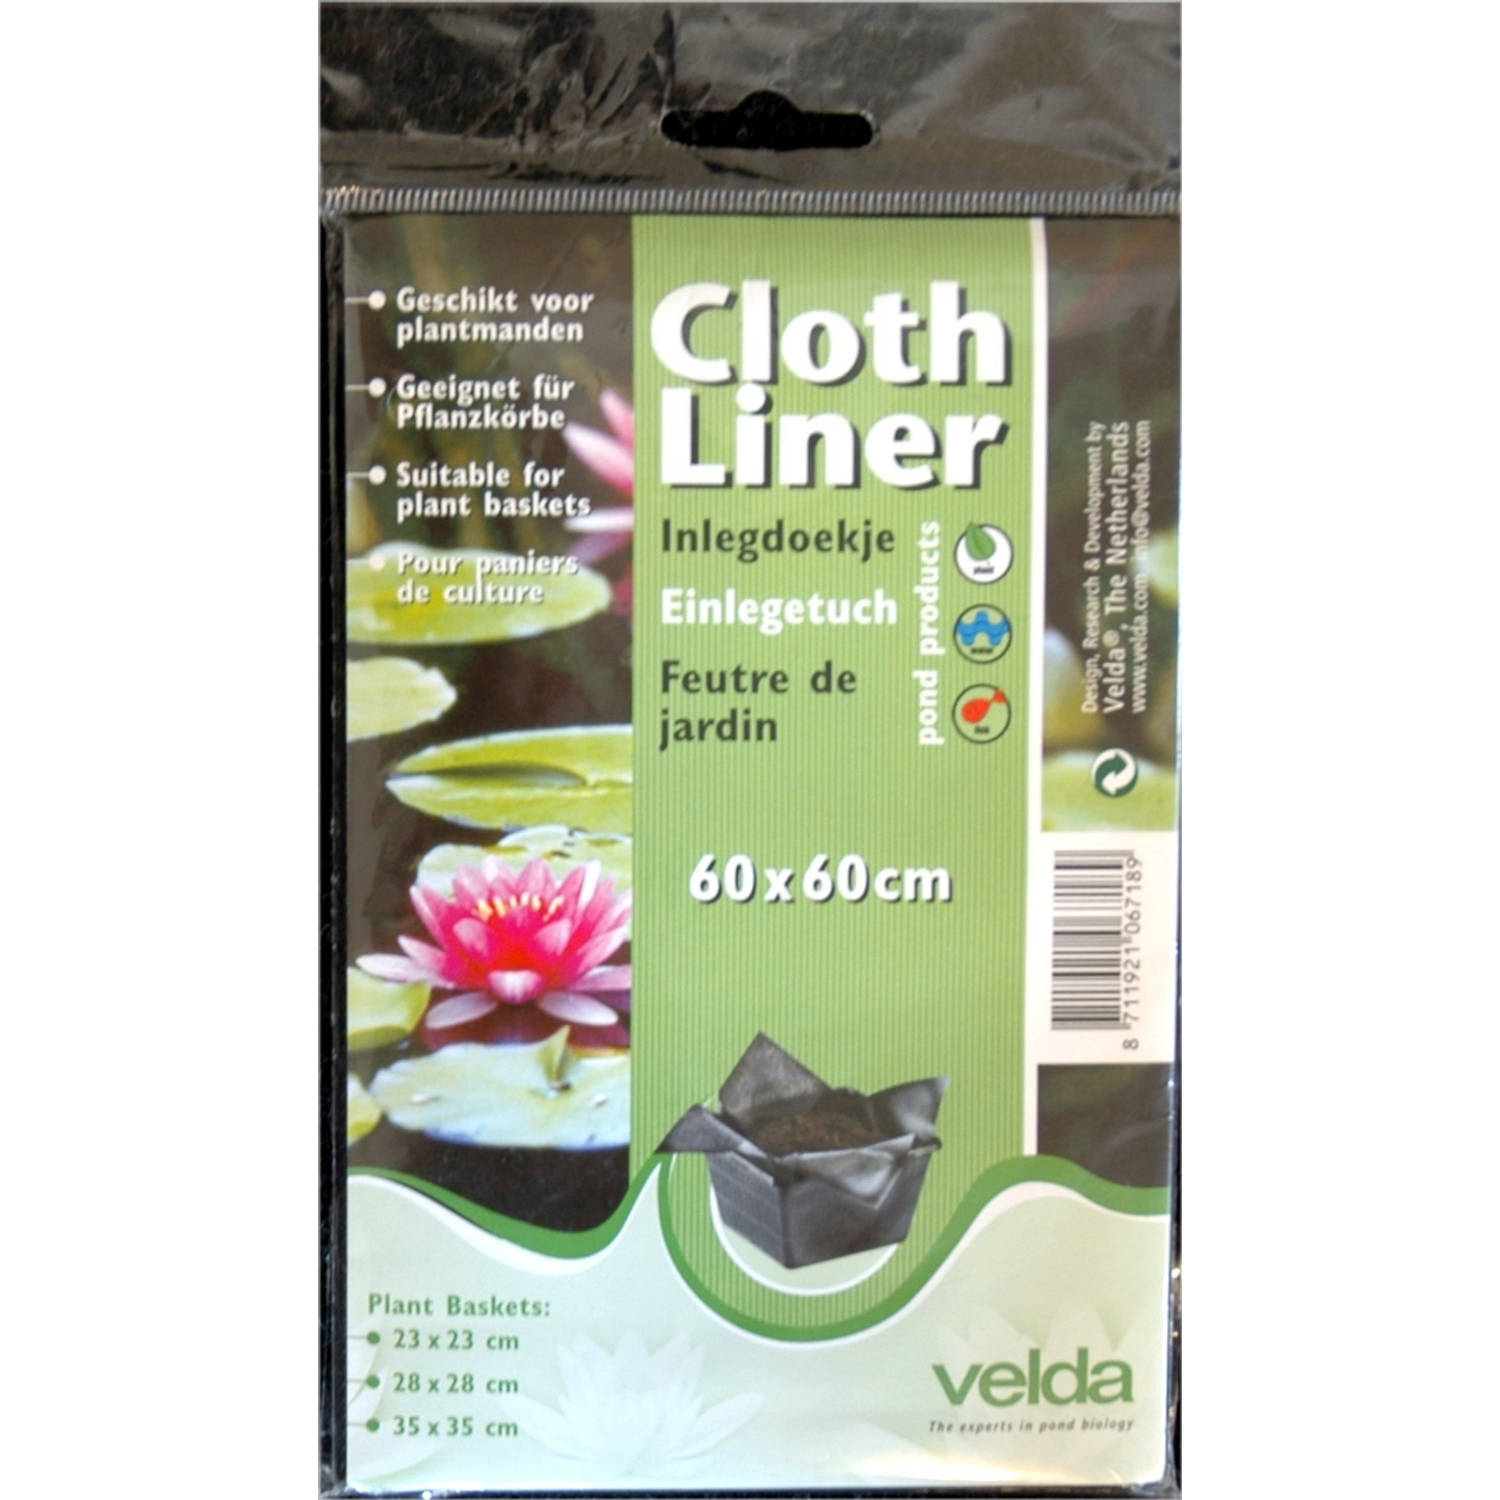 Velda - 5 stuks Cloth Liner Inlegdoekje 60 x 60 cm 1 stuk